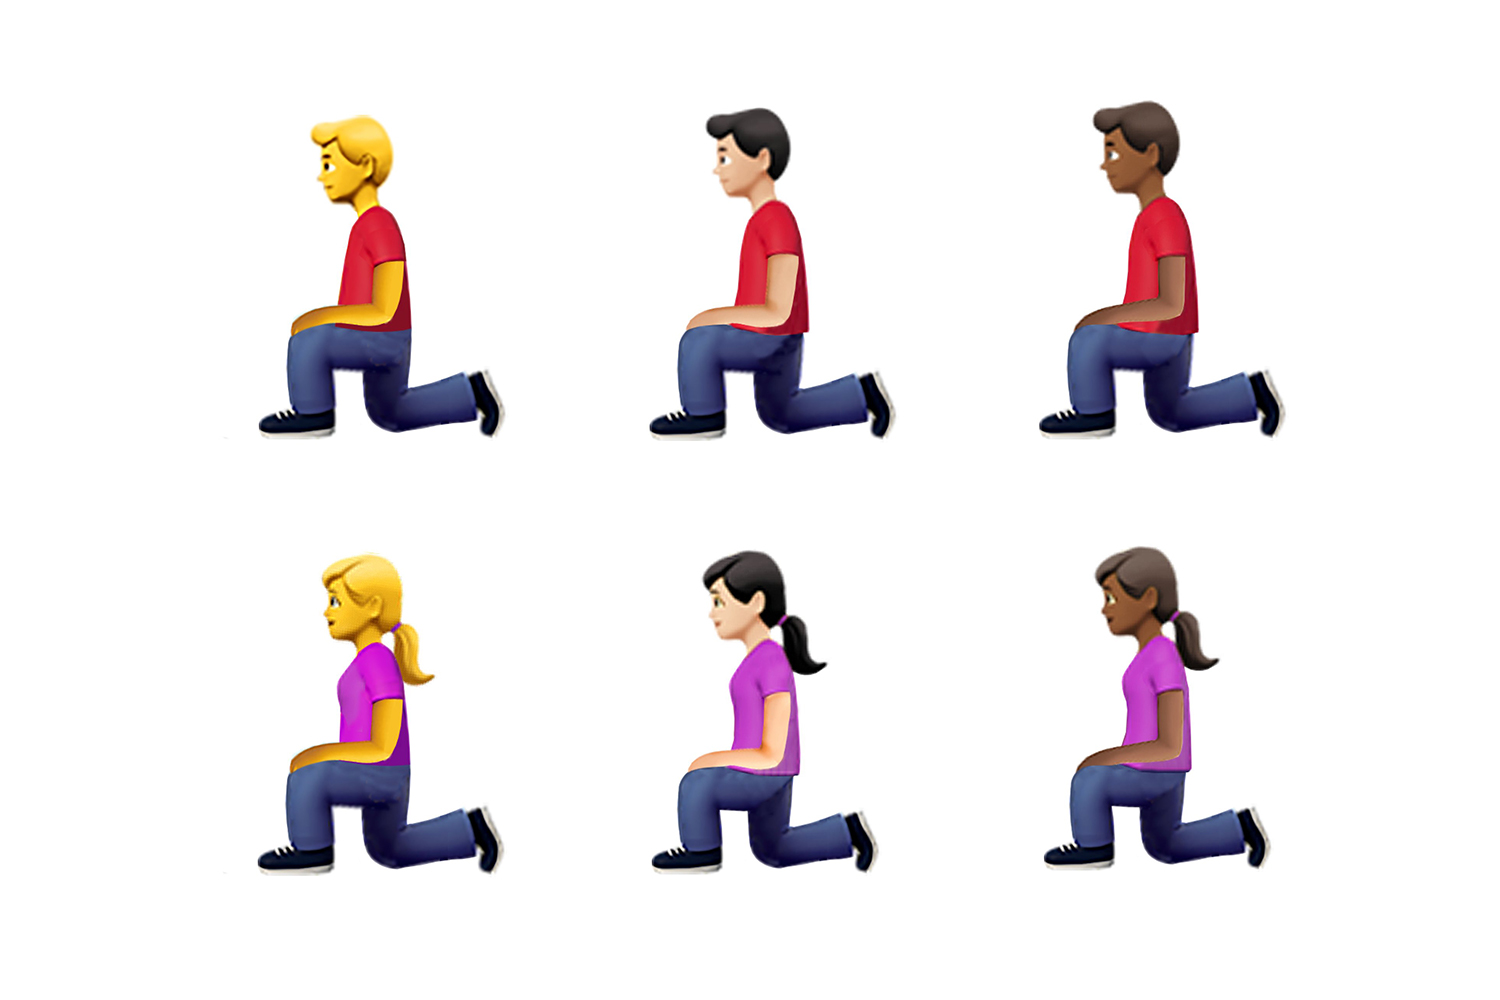 kneeling in protest emoji